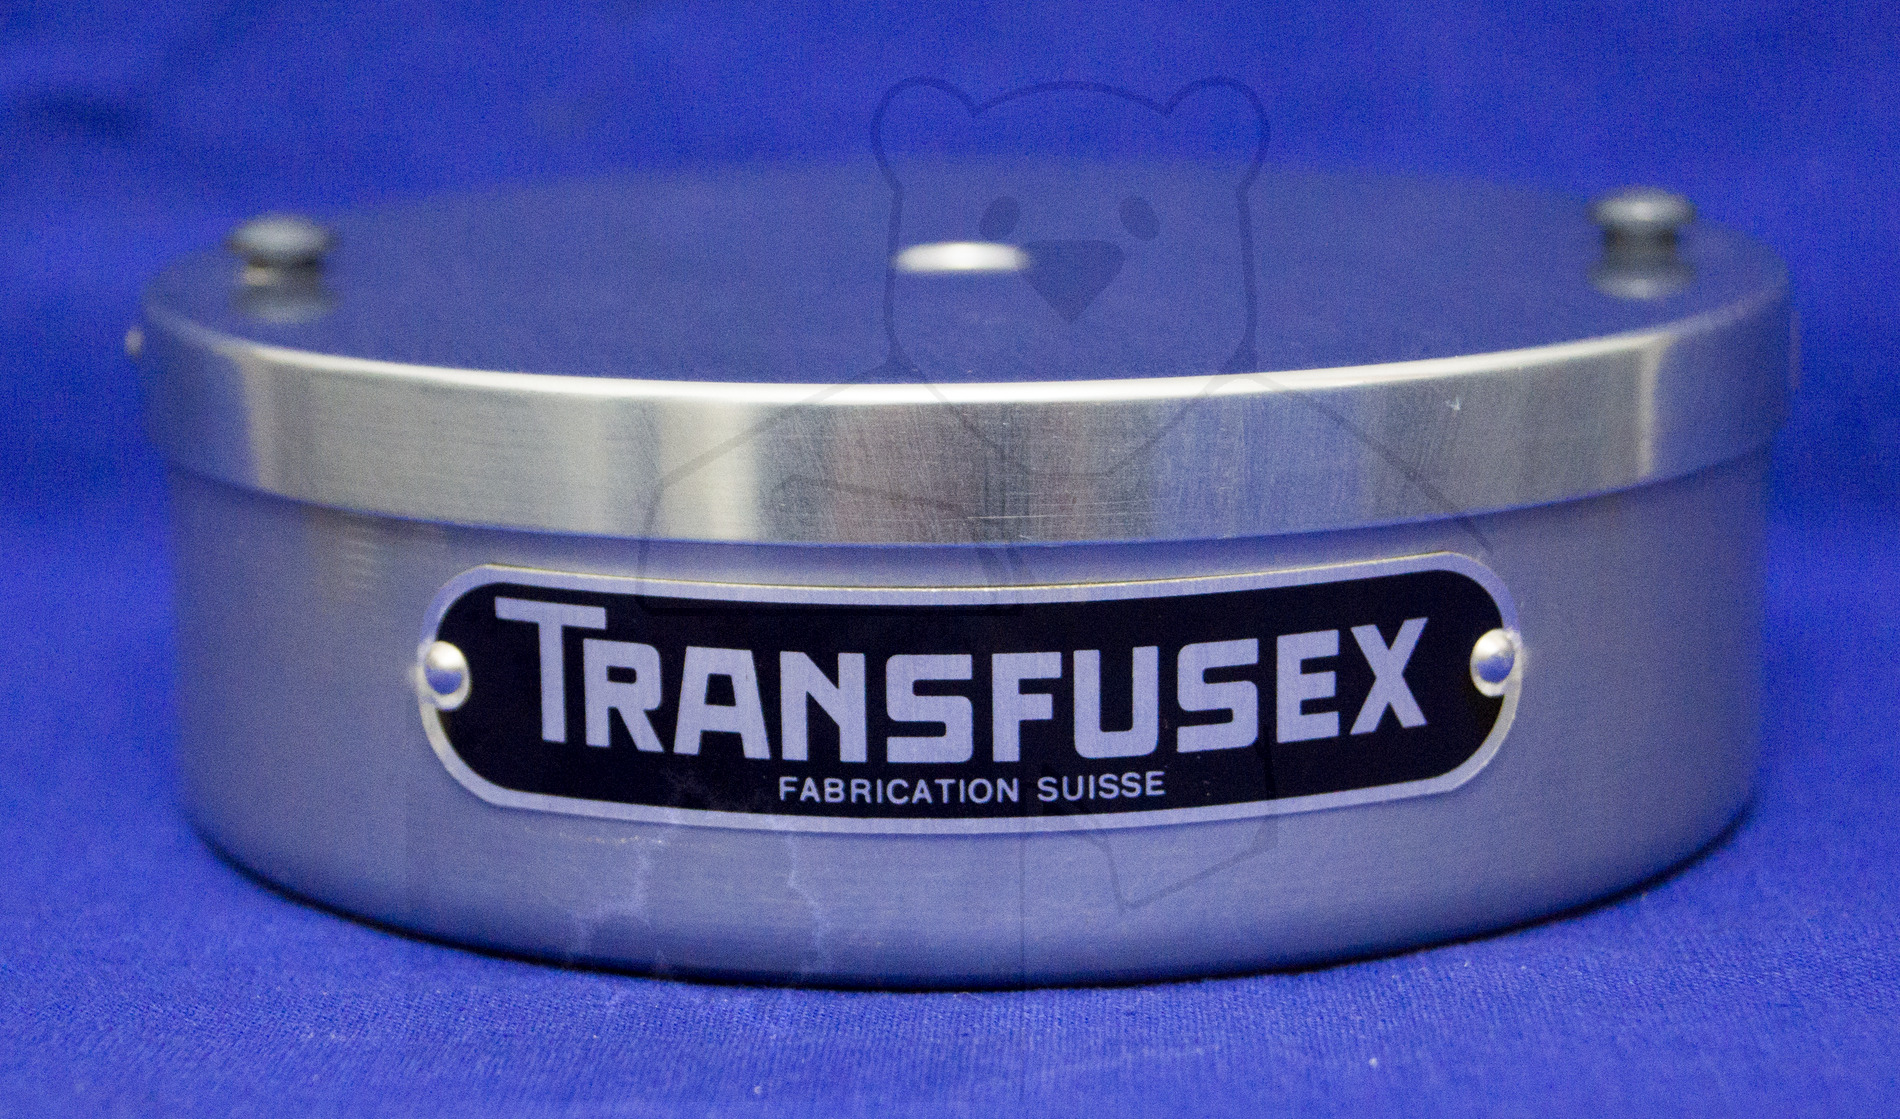 Bluttransfusion mit der Blutpumpe "Transfusex", Geschlossene Box, seitlich